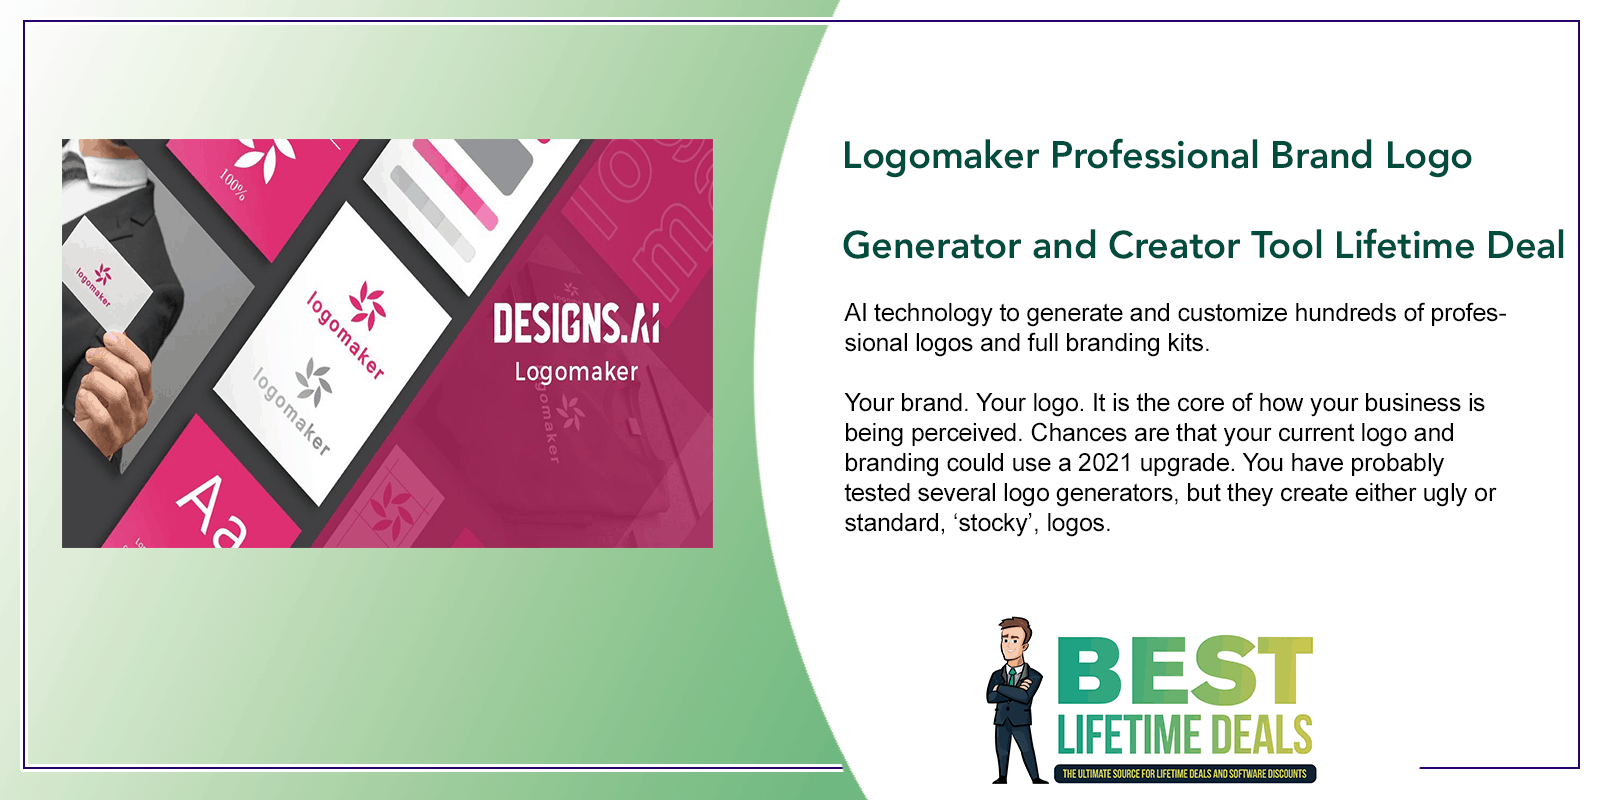 Logomaker Professional Brand Logo Generator and Creator Tool Featured Image